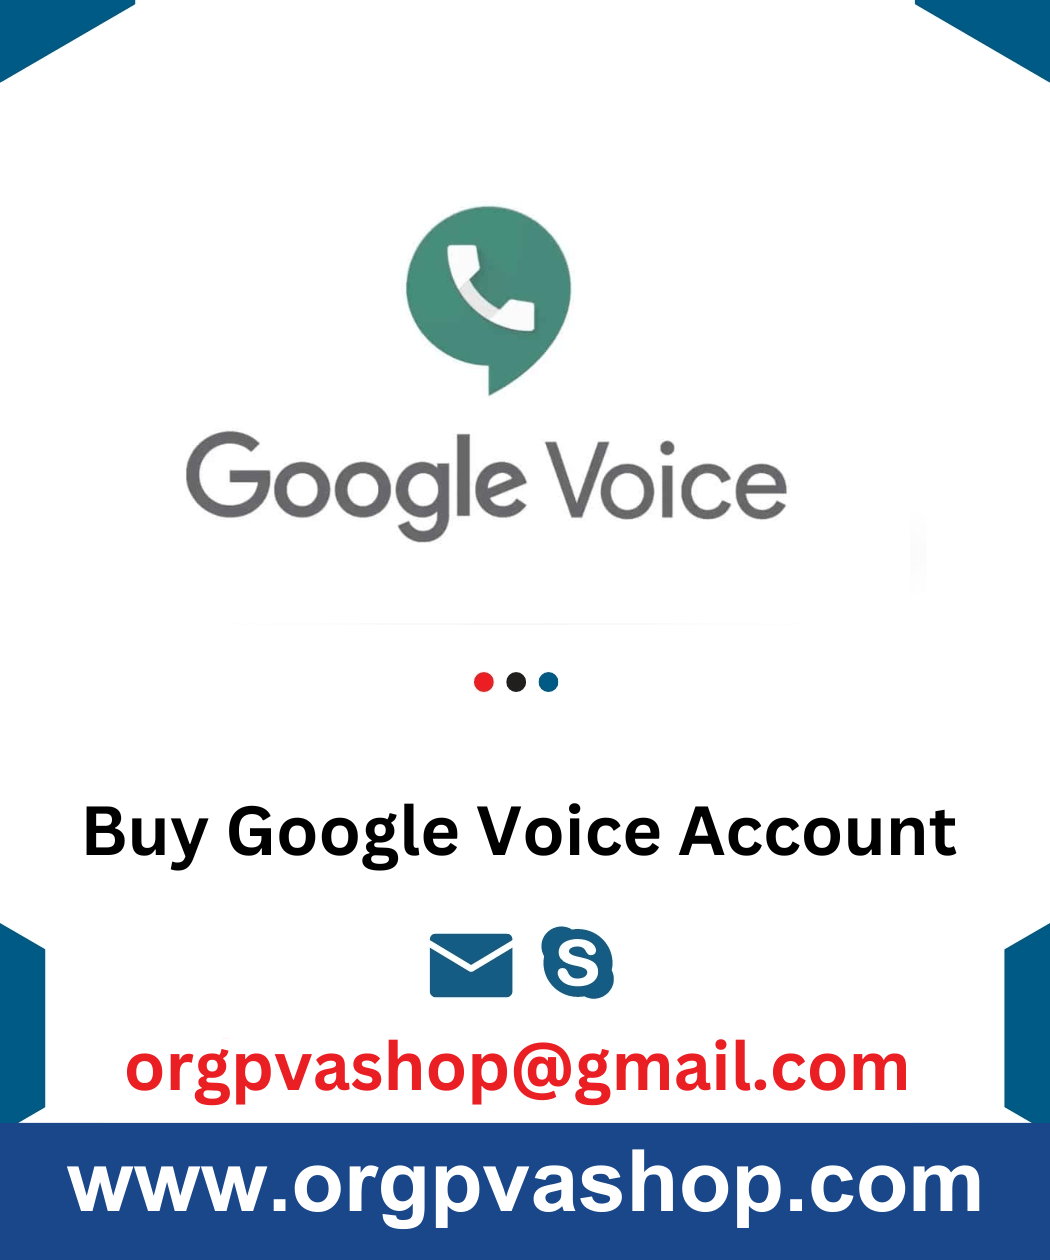 New Google Voice Accounts